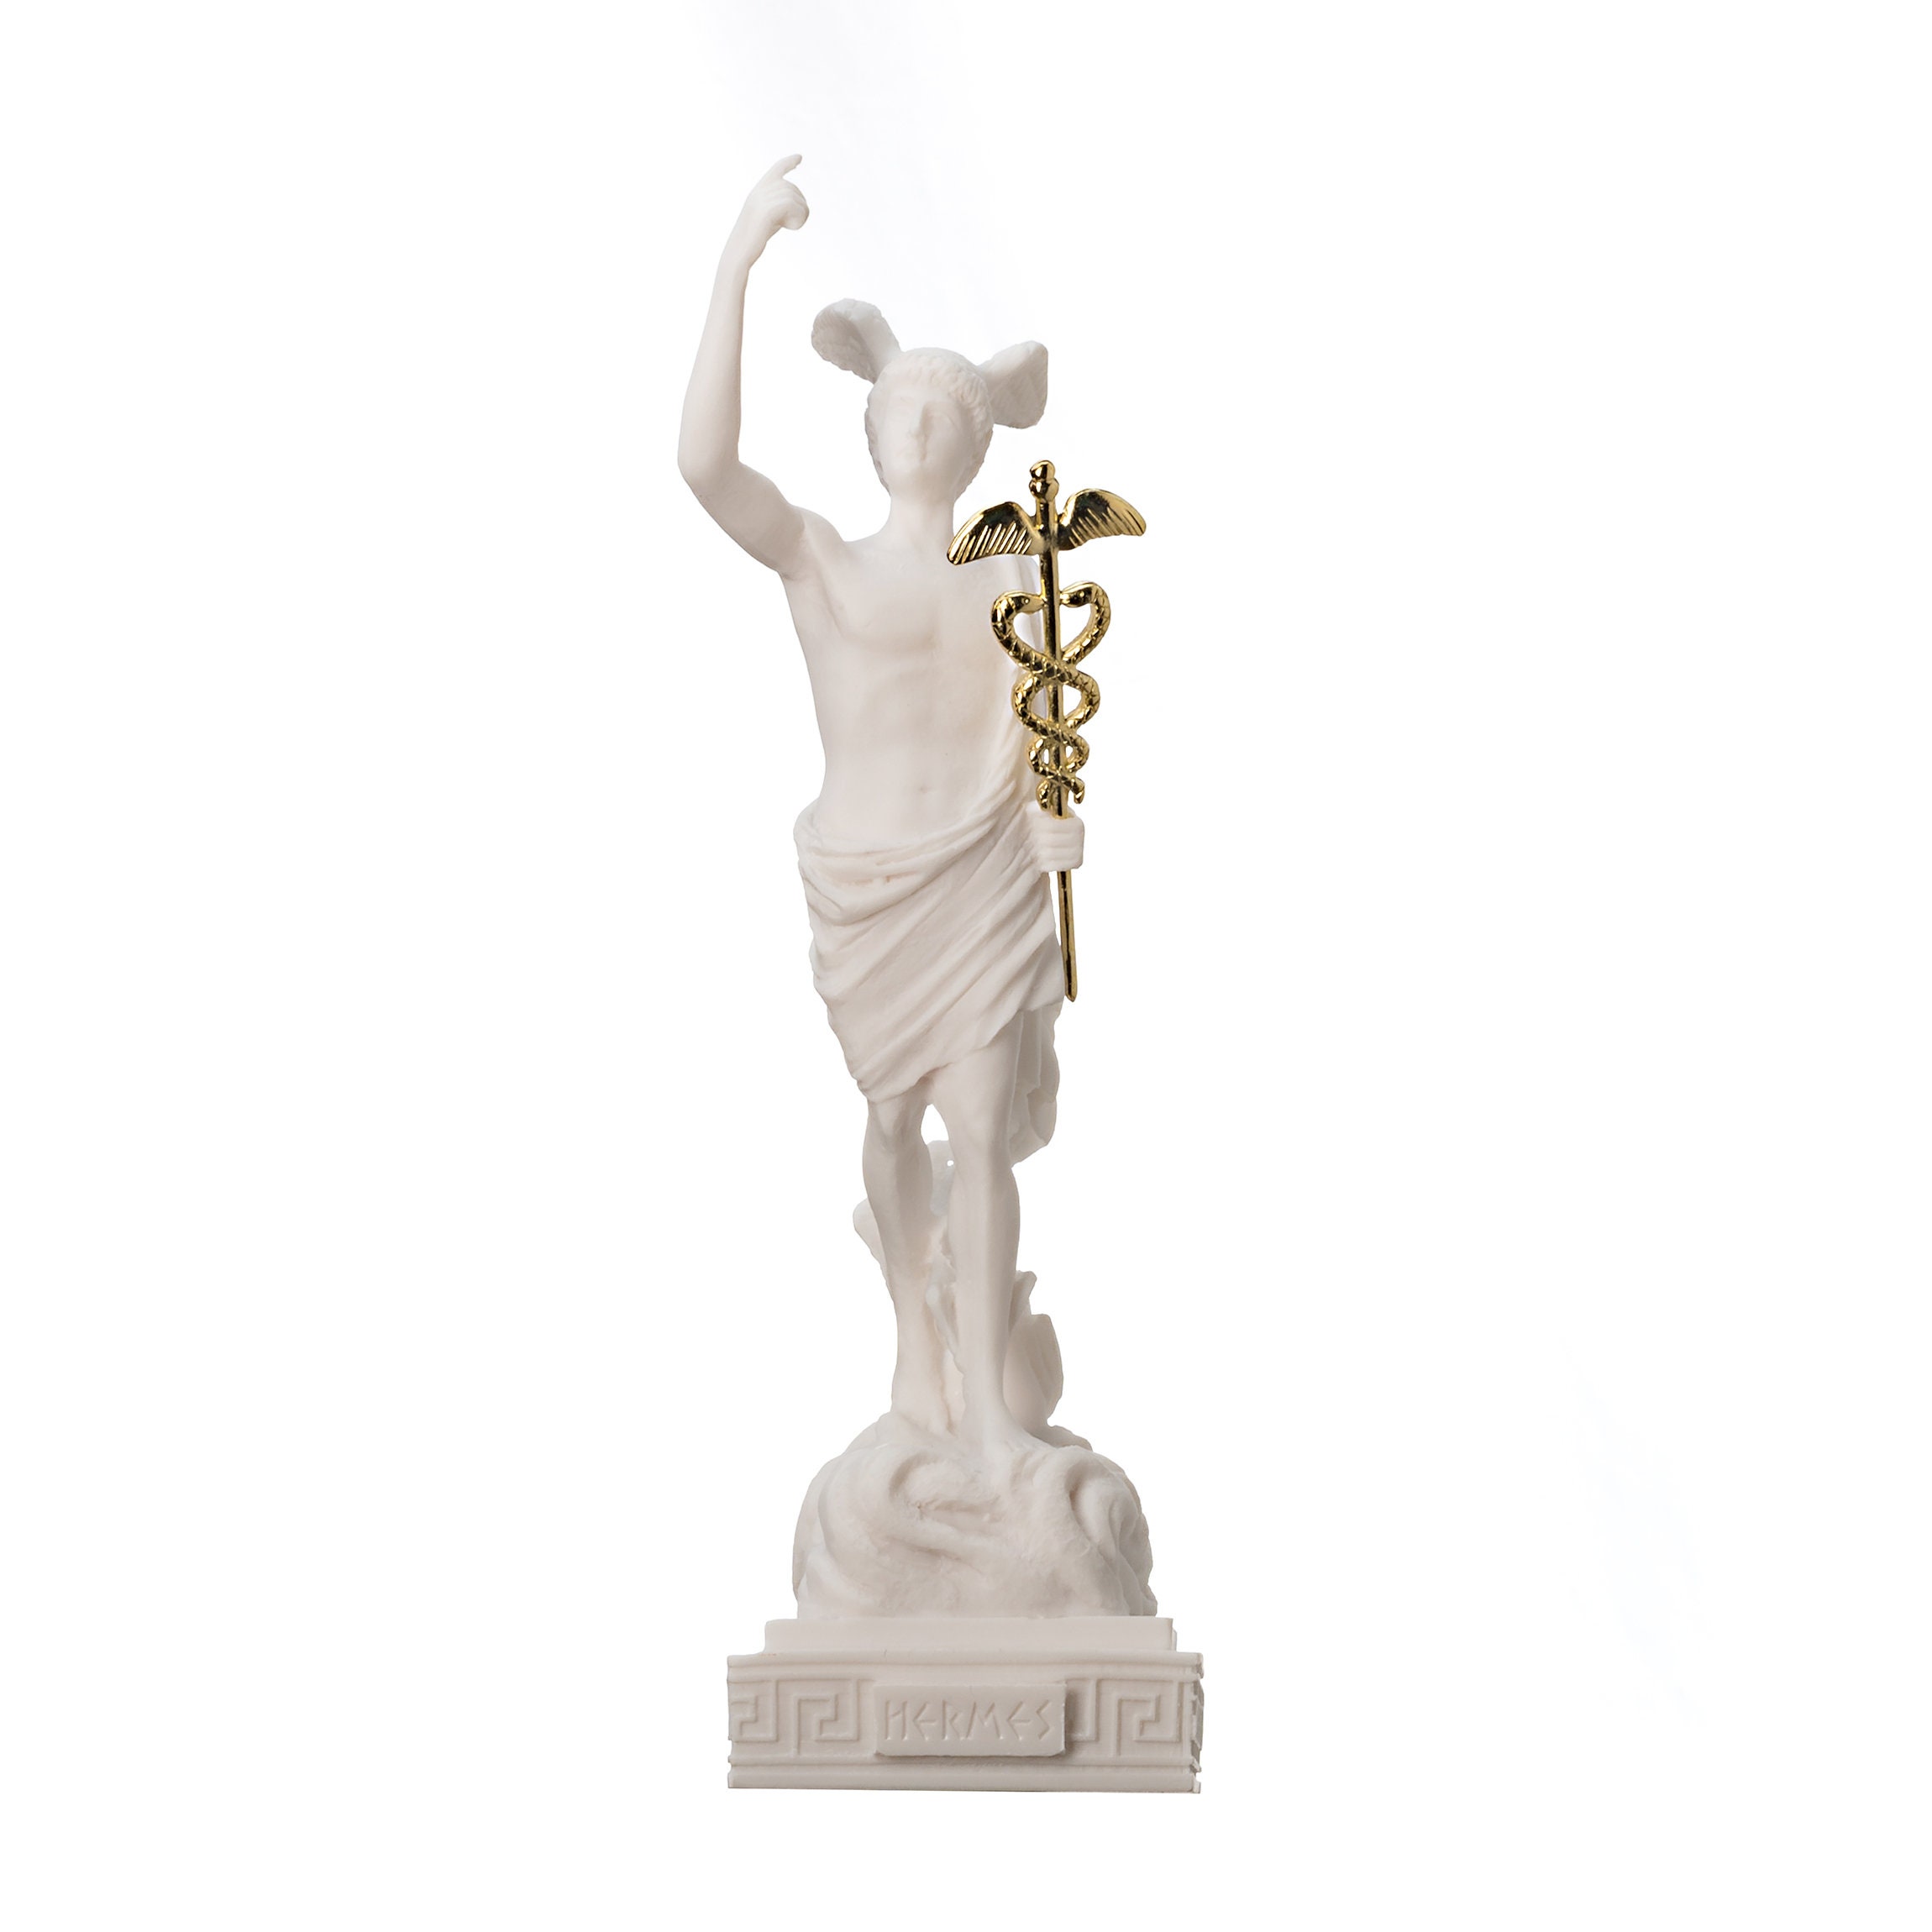 Hermes Mercury God Son Of Zeus Greek Roman Statue